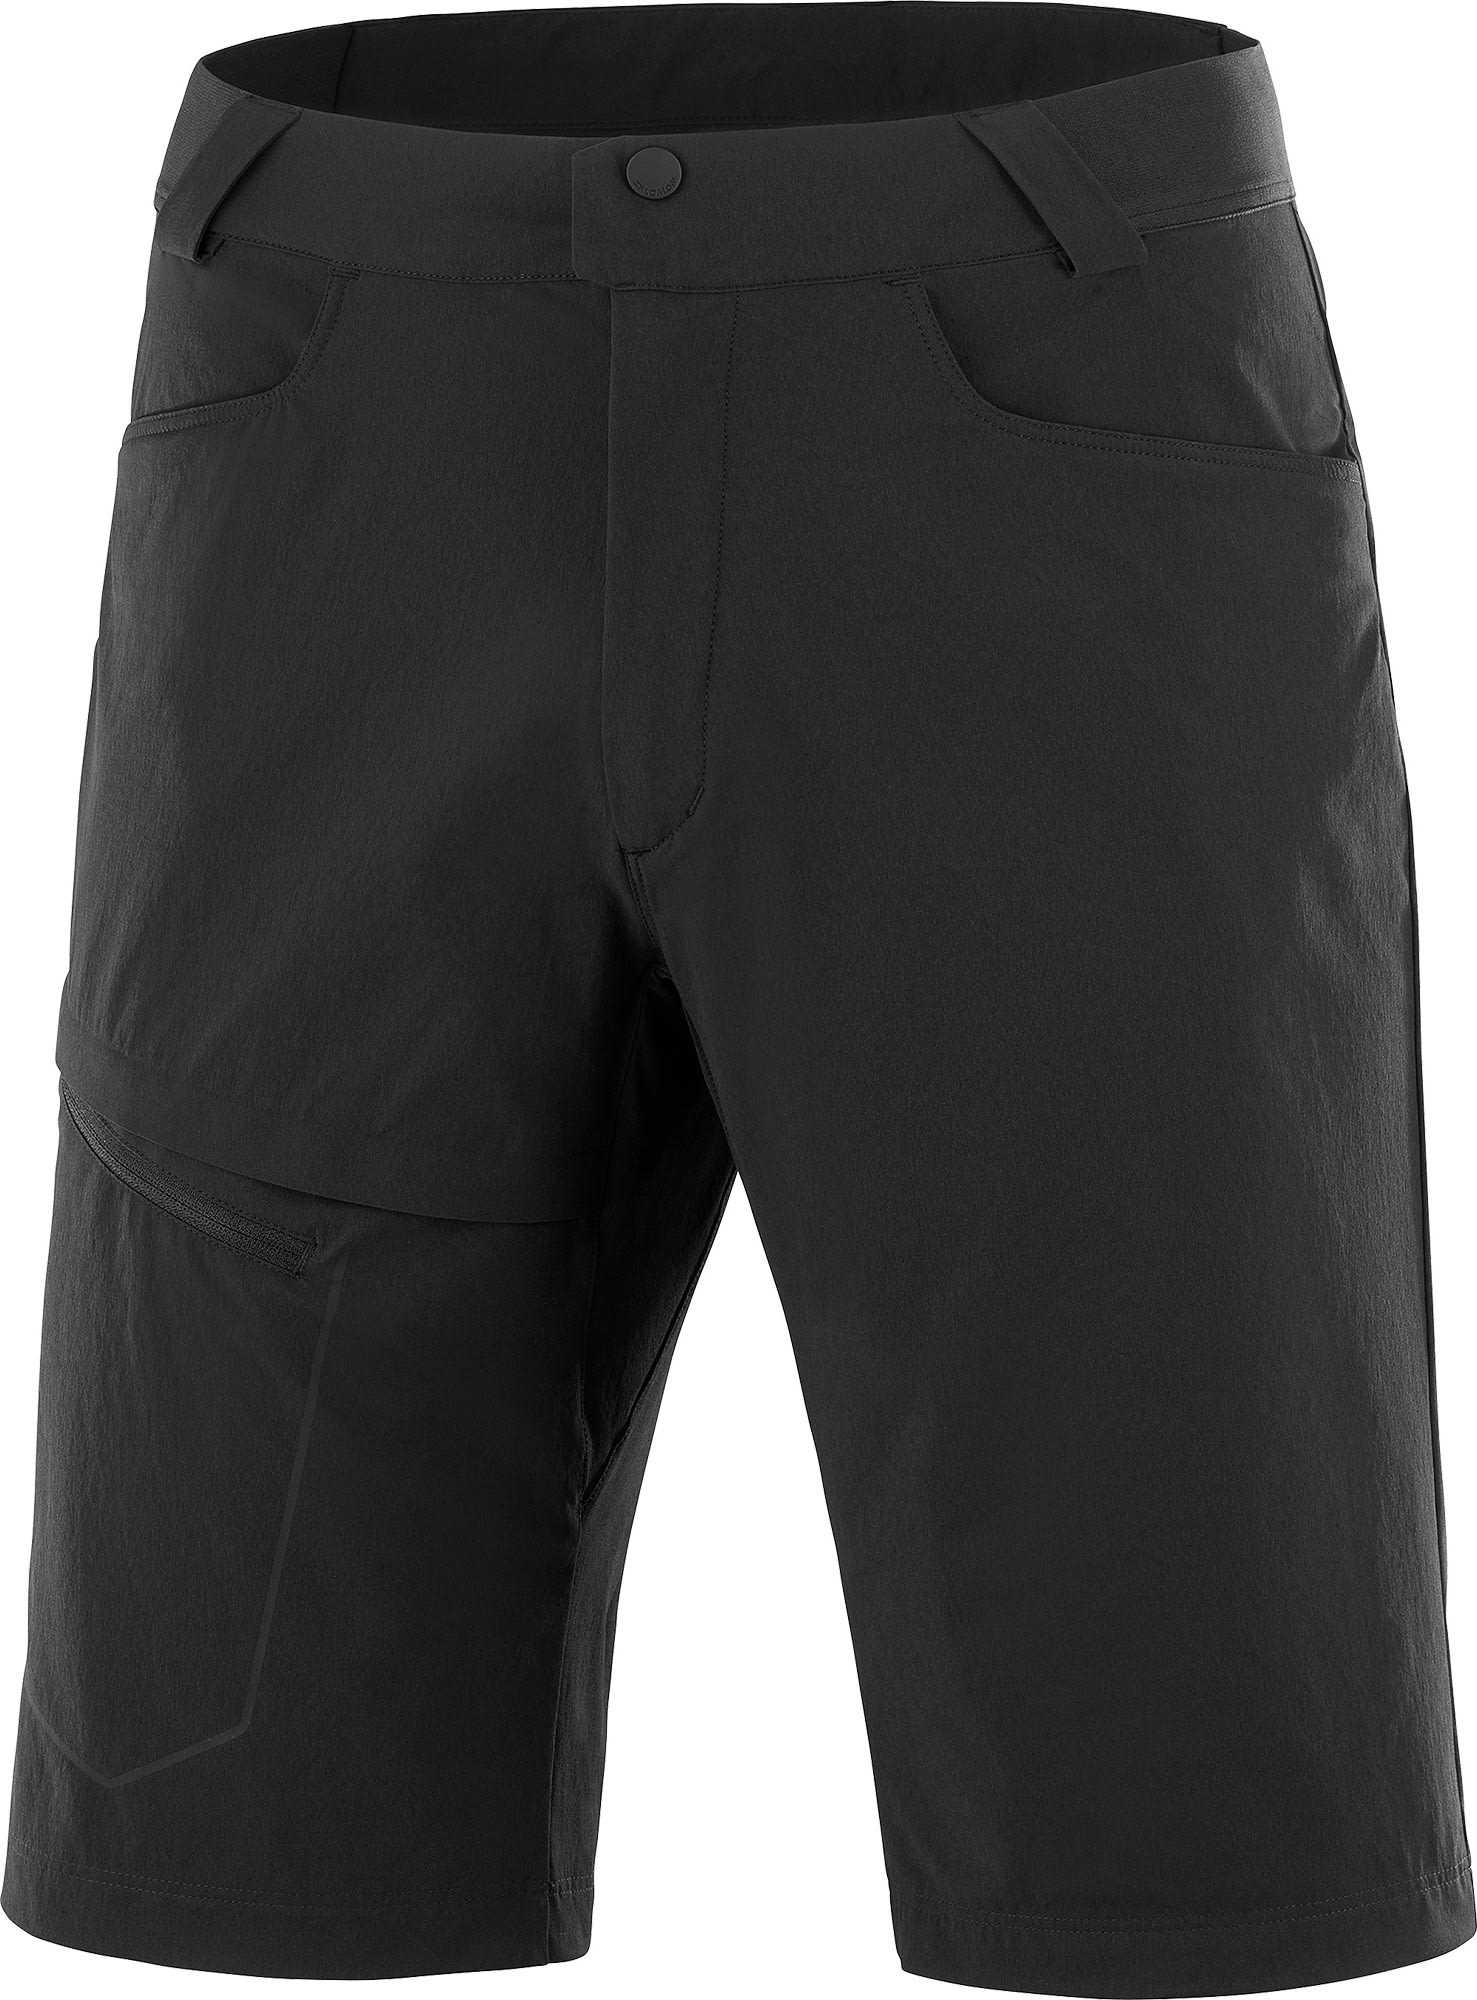 Buy Salomon Men's Wayfarer Shorts from Outnorth